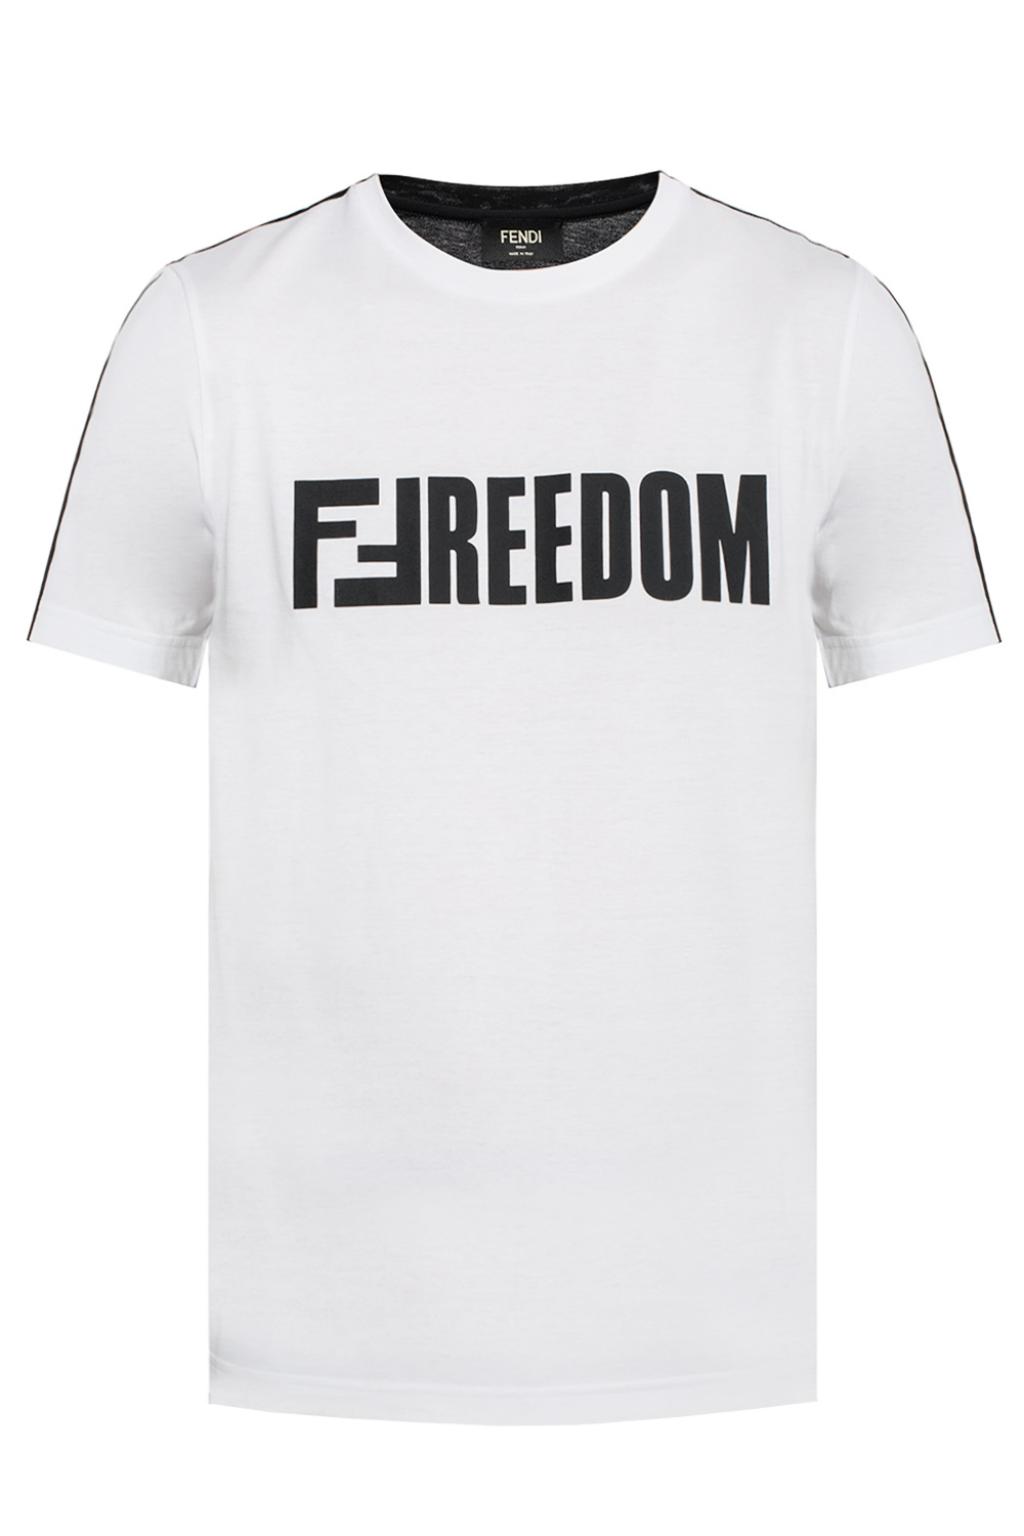 fendi freedom t shirt